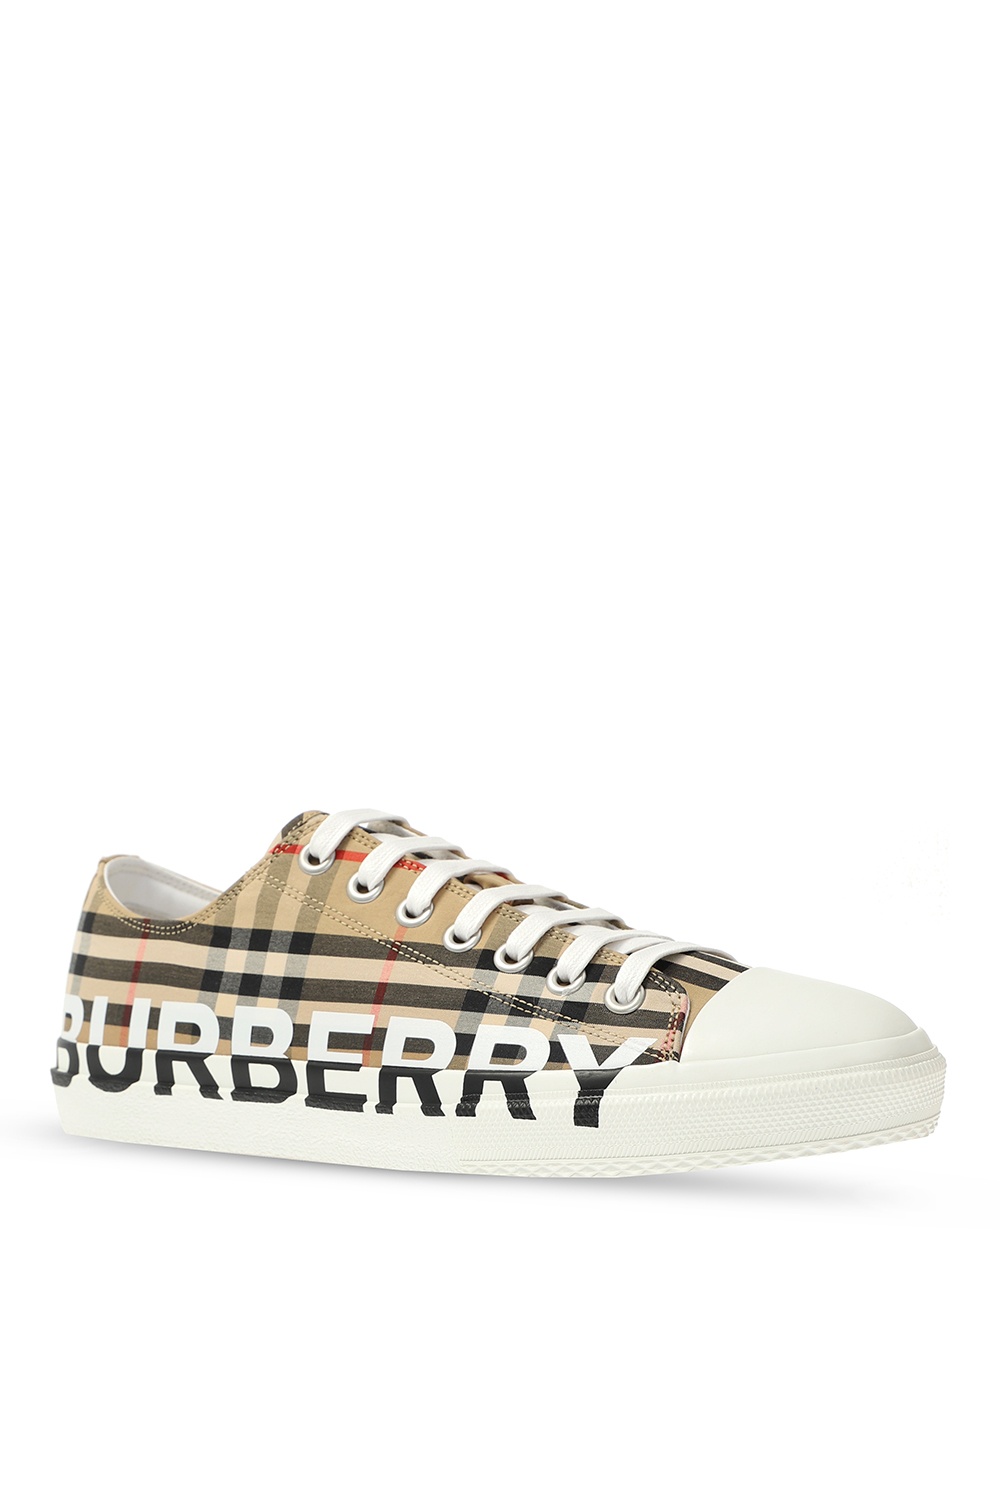 Burberry Logo sneakers